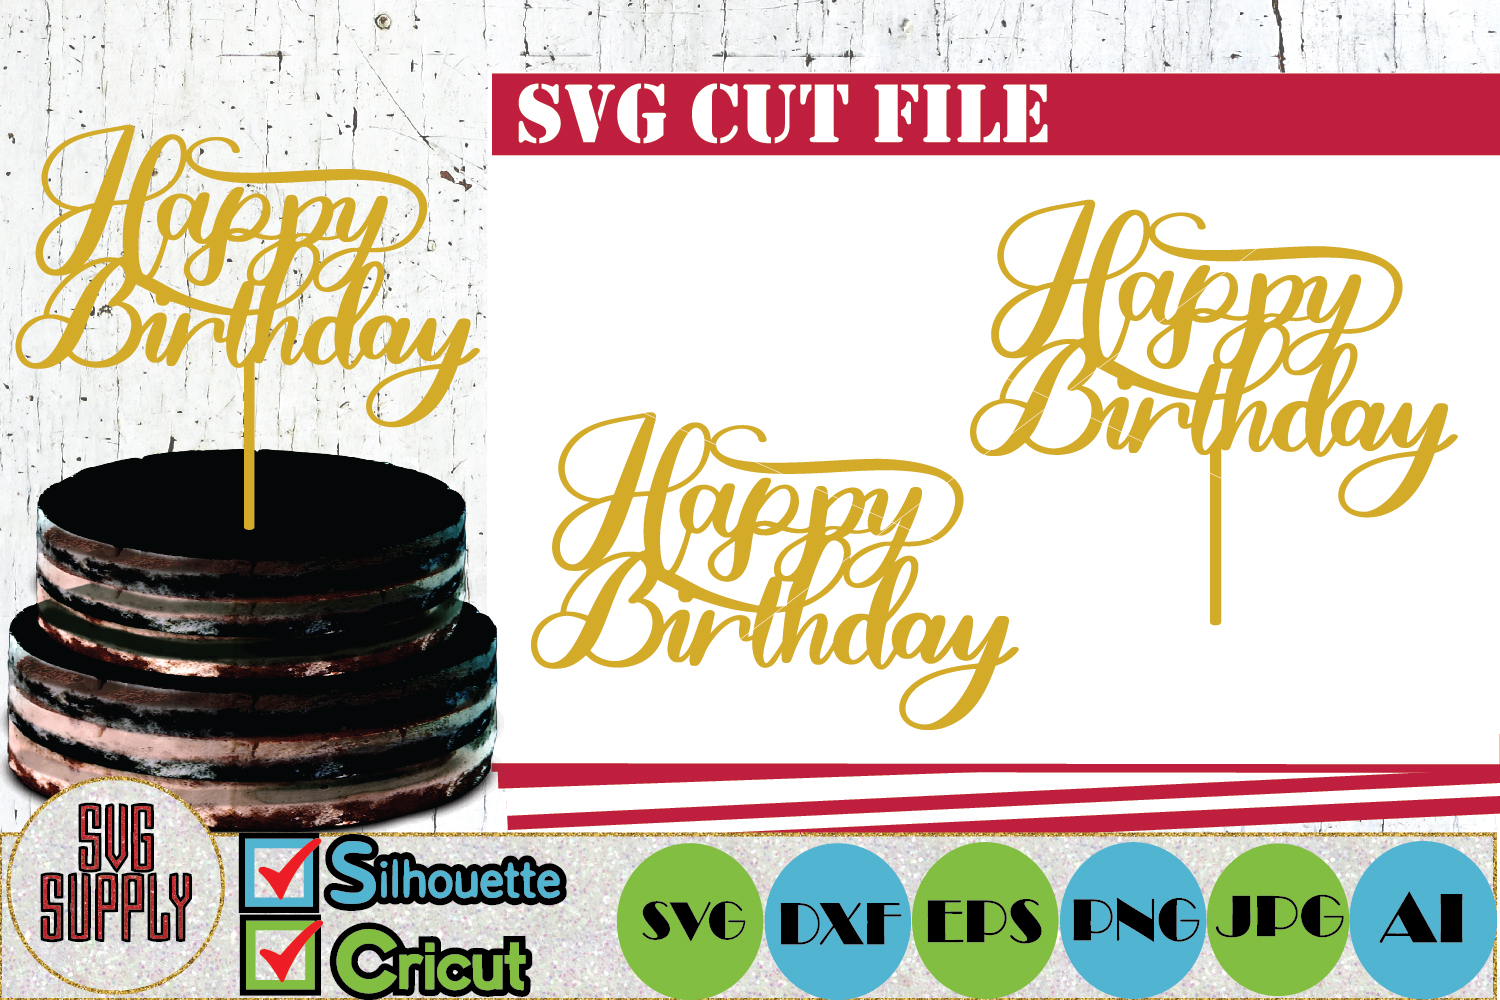 Happy Birthday Cake Topper SVG Cut File (518187) | Cut ...